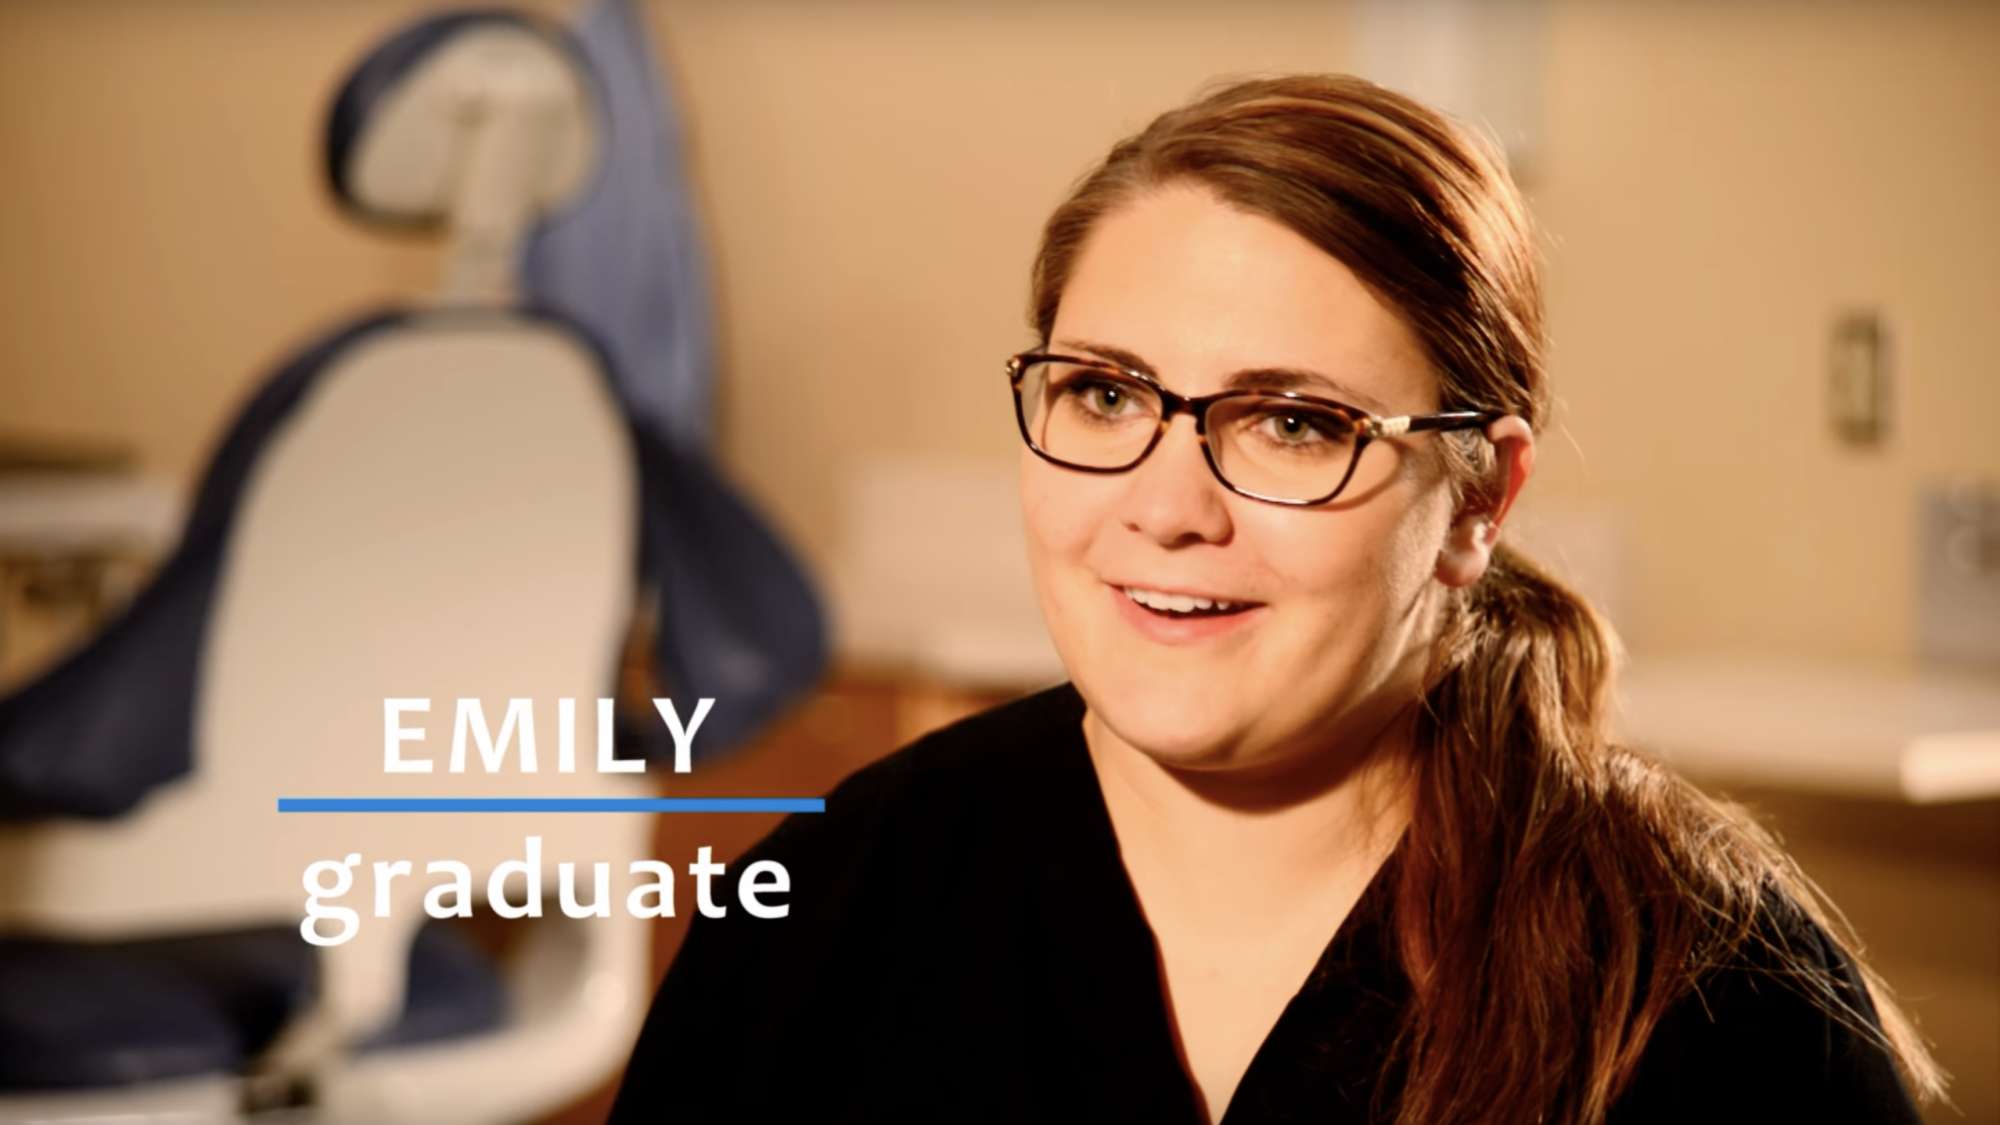 Emily, a Dental Hygienist graduate